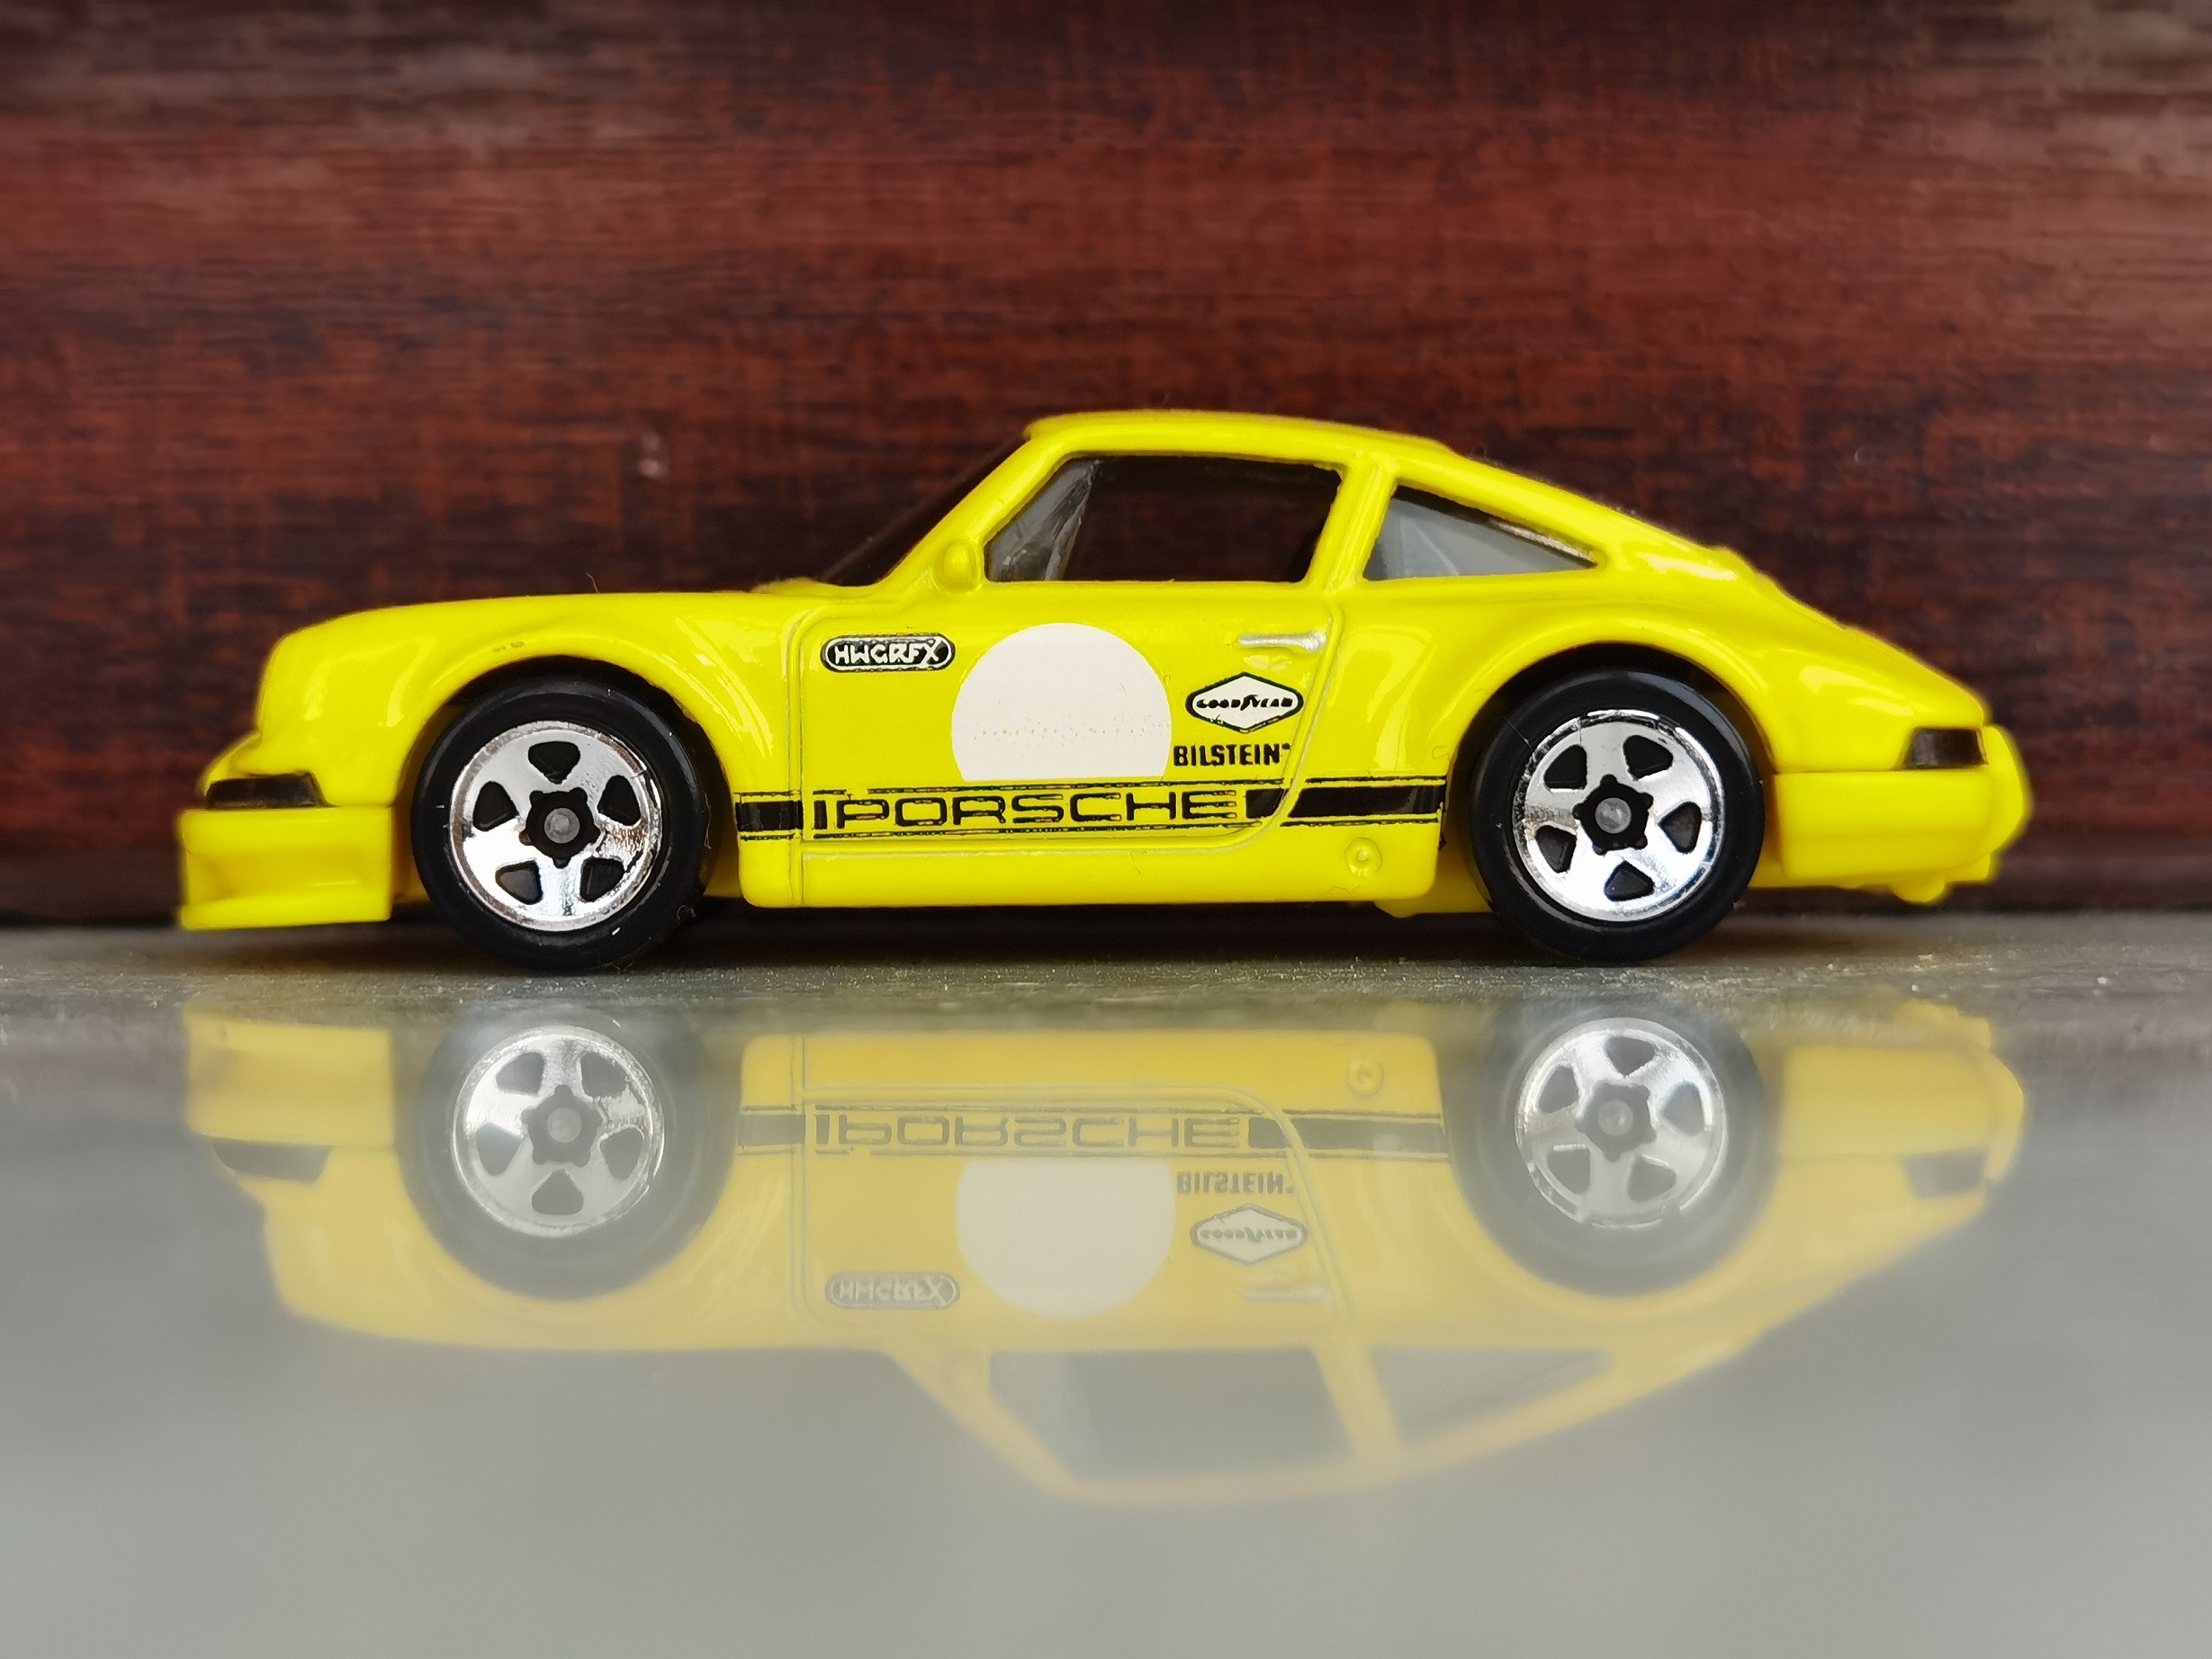 Porsche Turbo, Majorette Model Cars Wiki